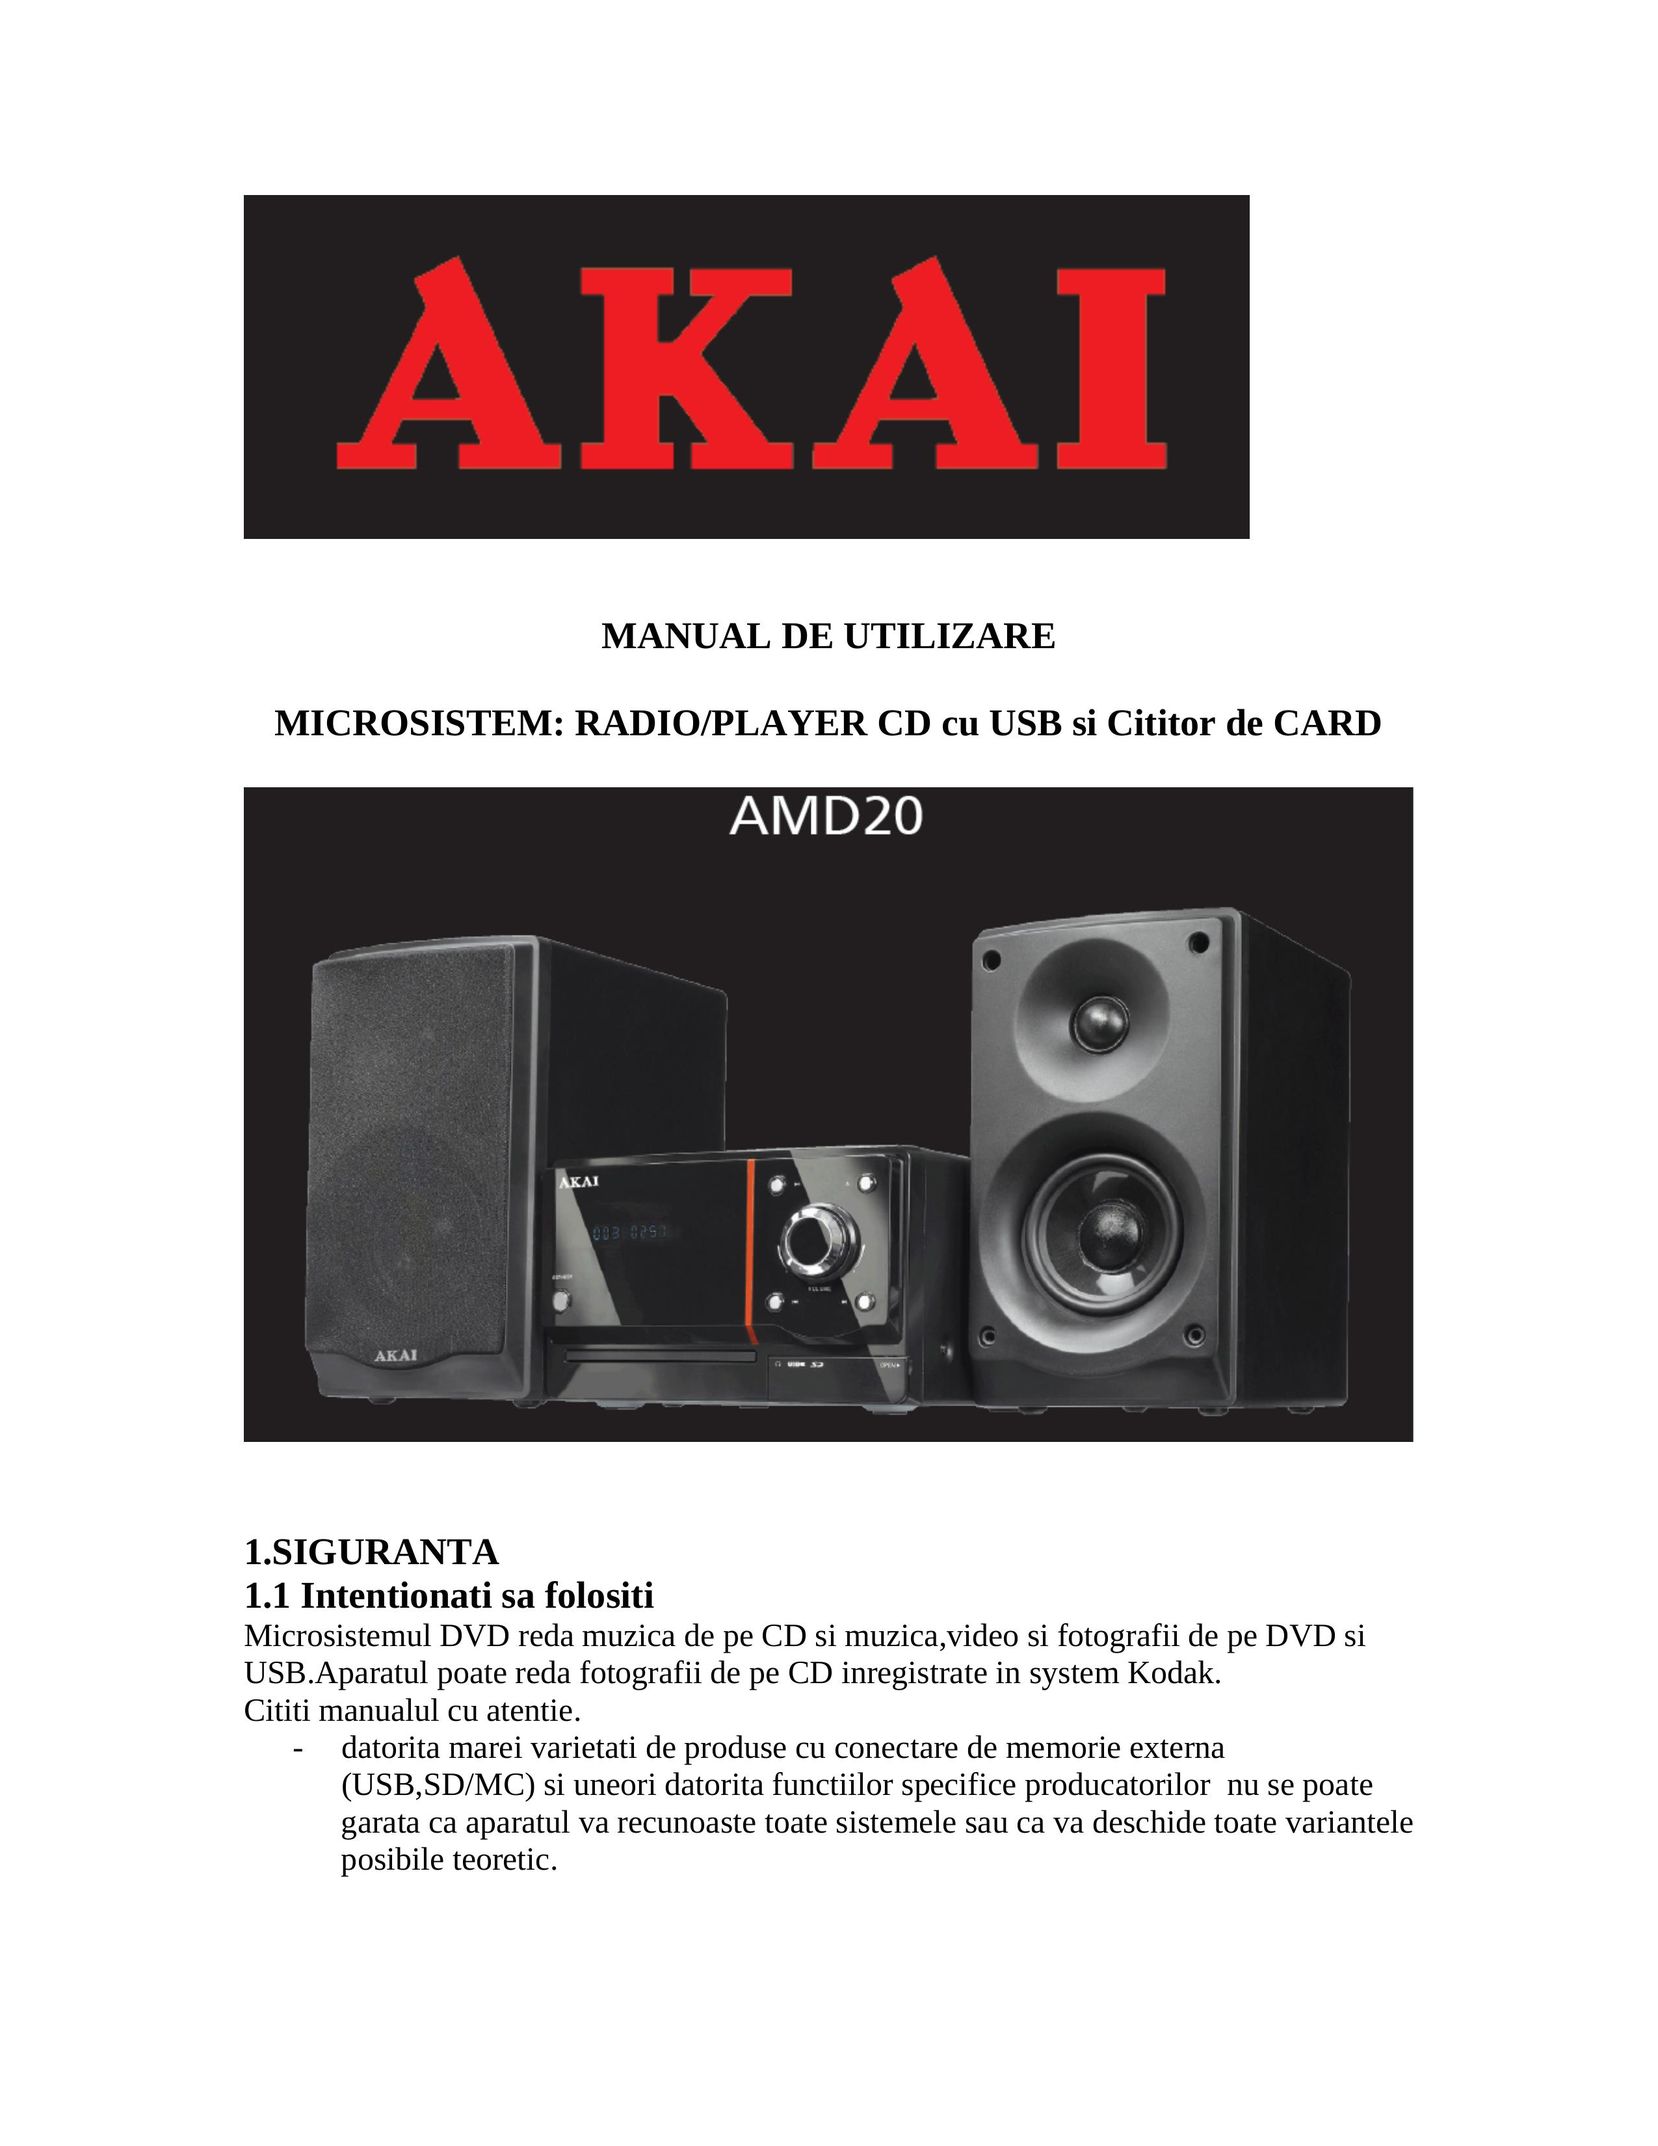 Akai AMD20 Stereo System User Manual